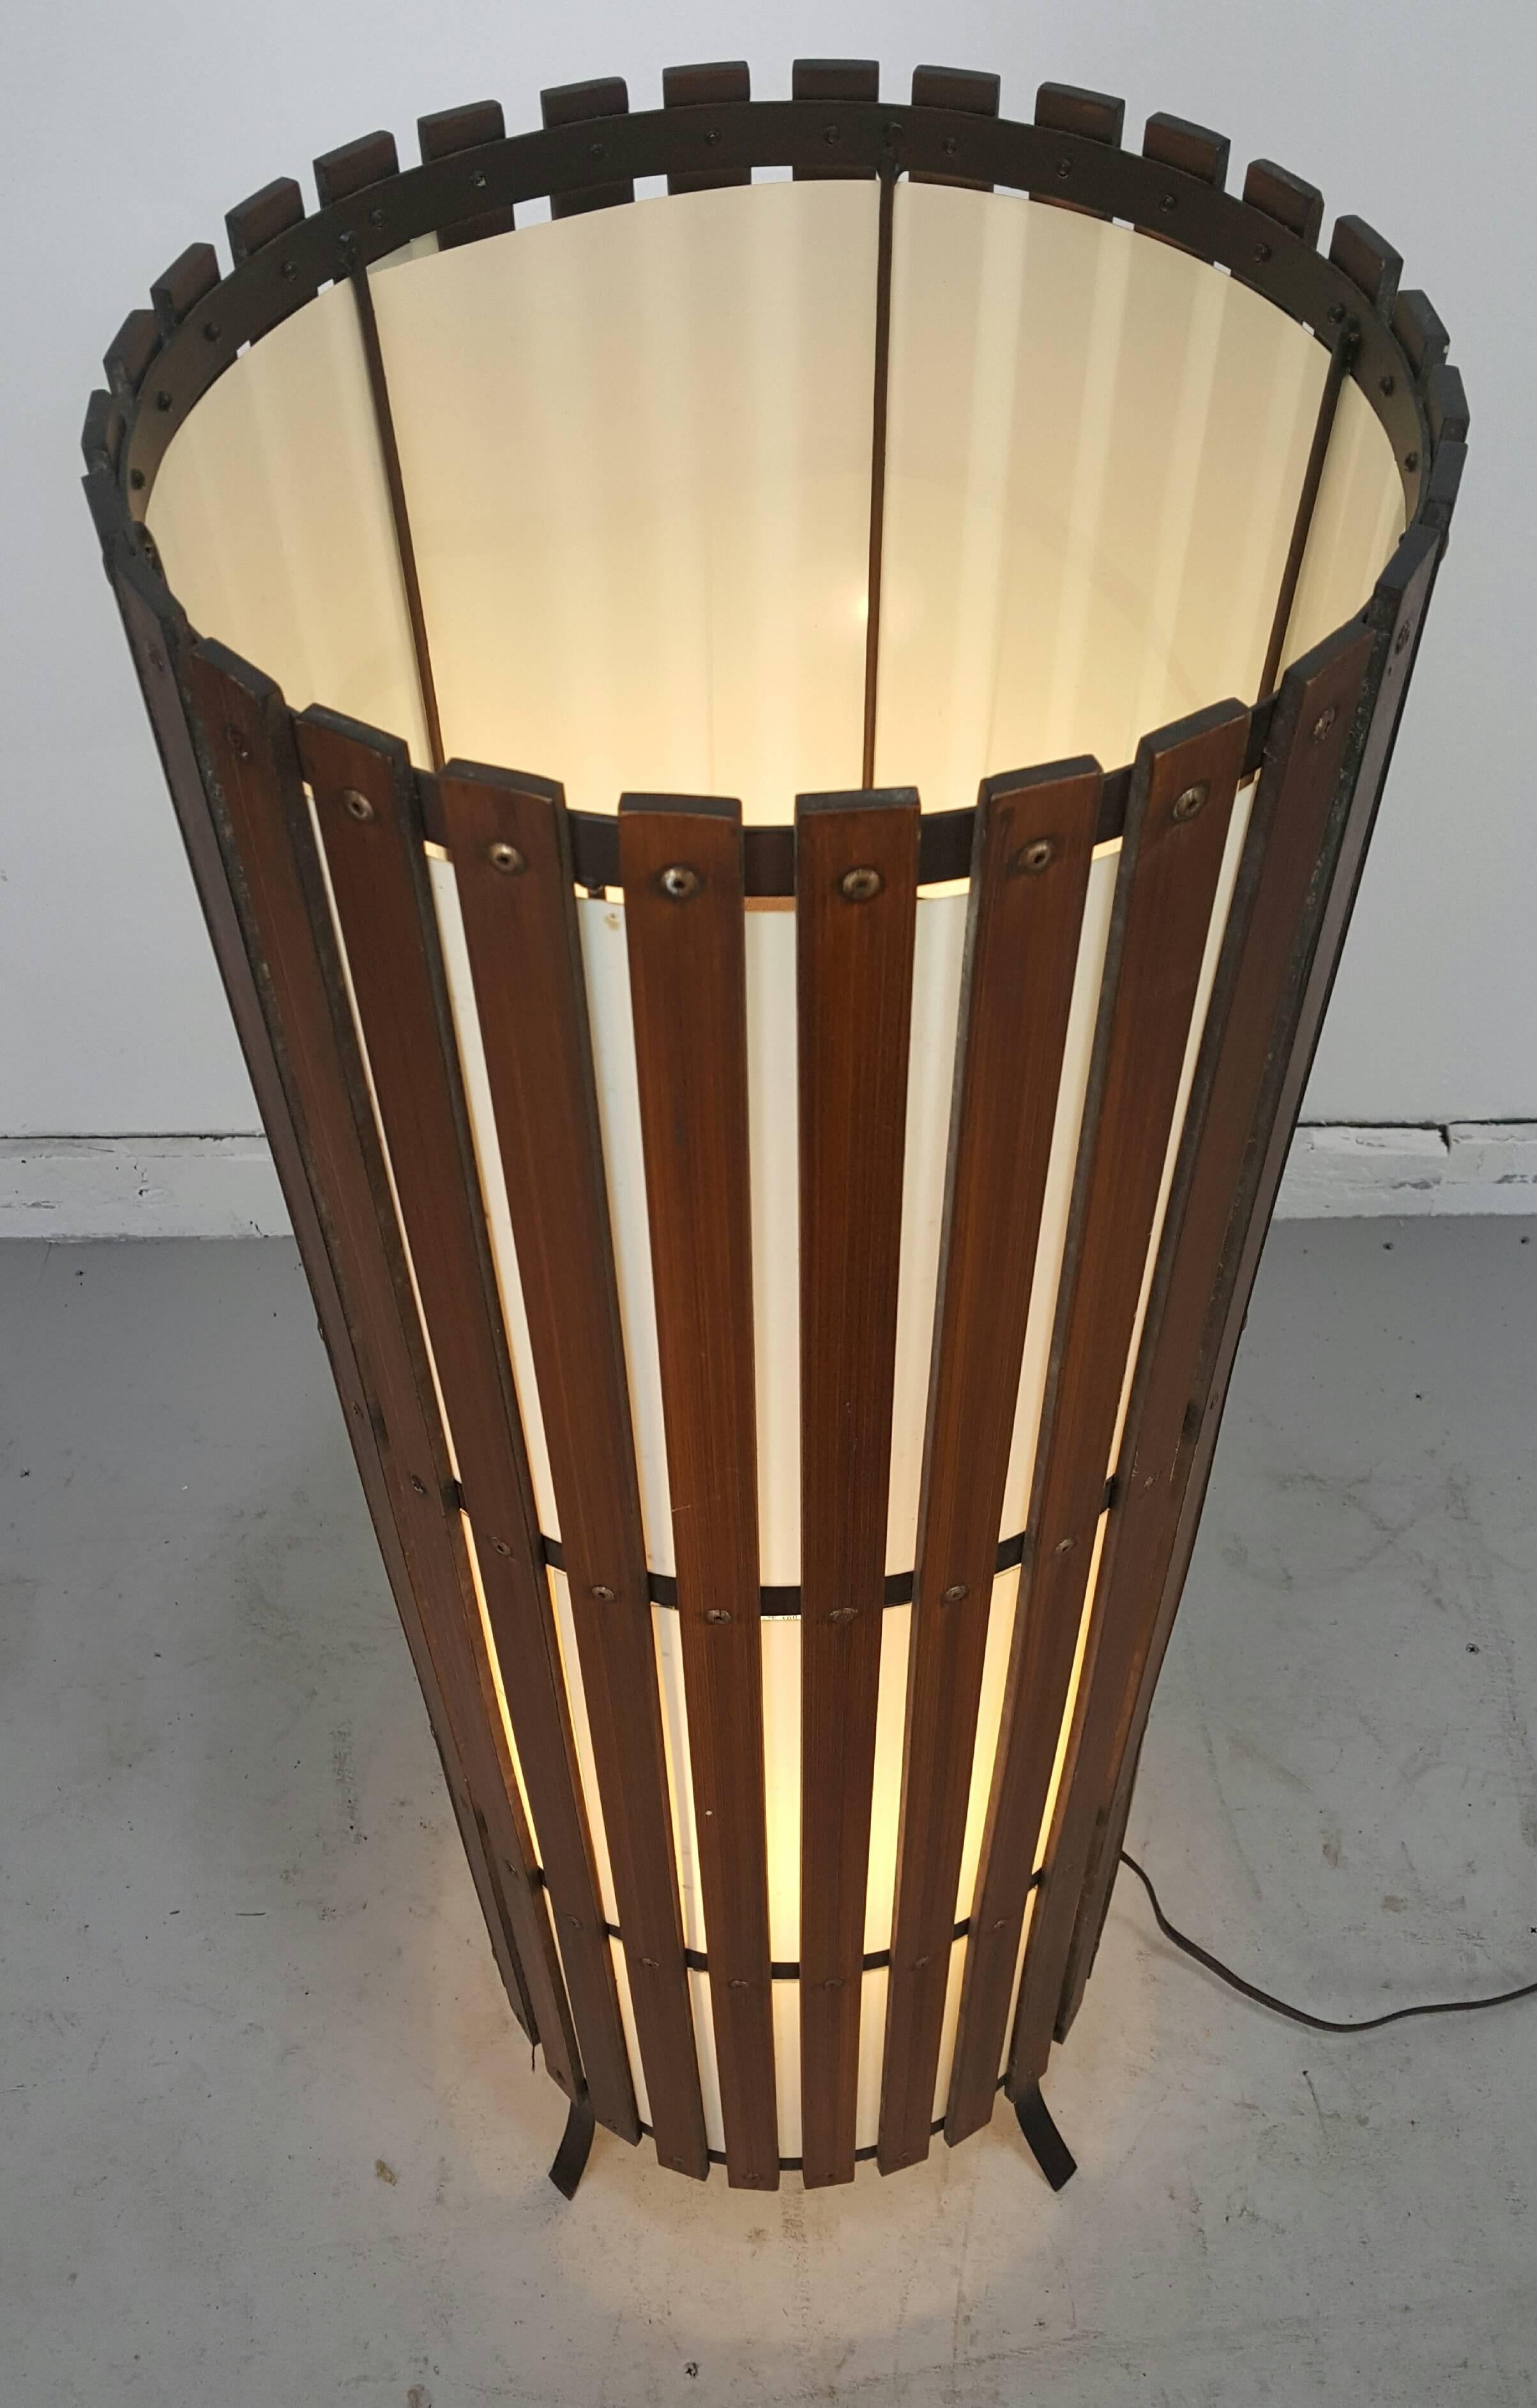 Contemporary modernist walnut slat wood cylinder floor lamp. Quality solid oiled walnut slats, retains original cylinder white acrylic shade, black metal fee. Wonderful warm glow when illuminated.